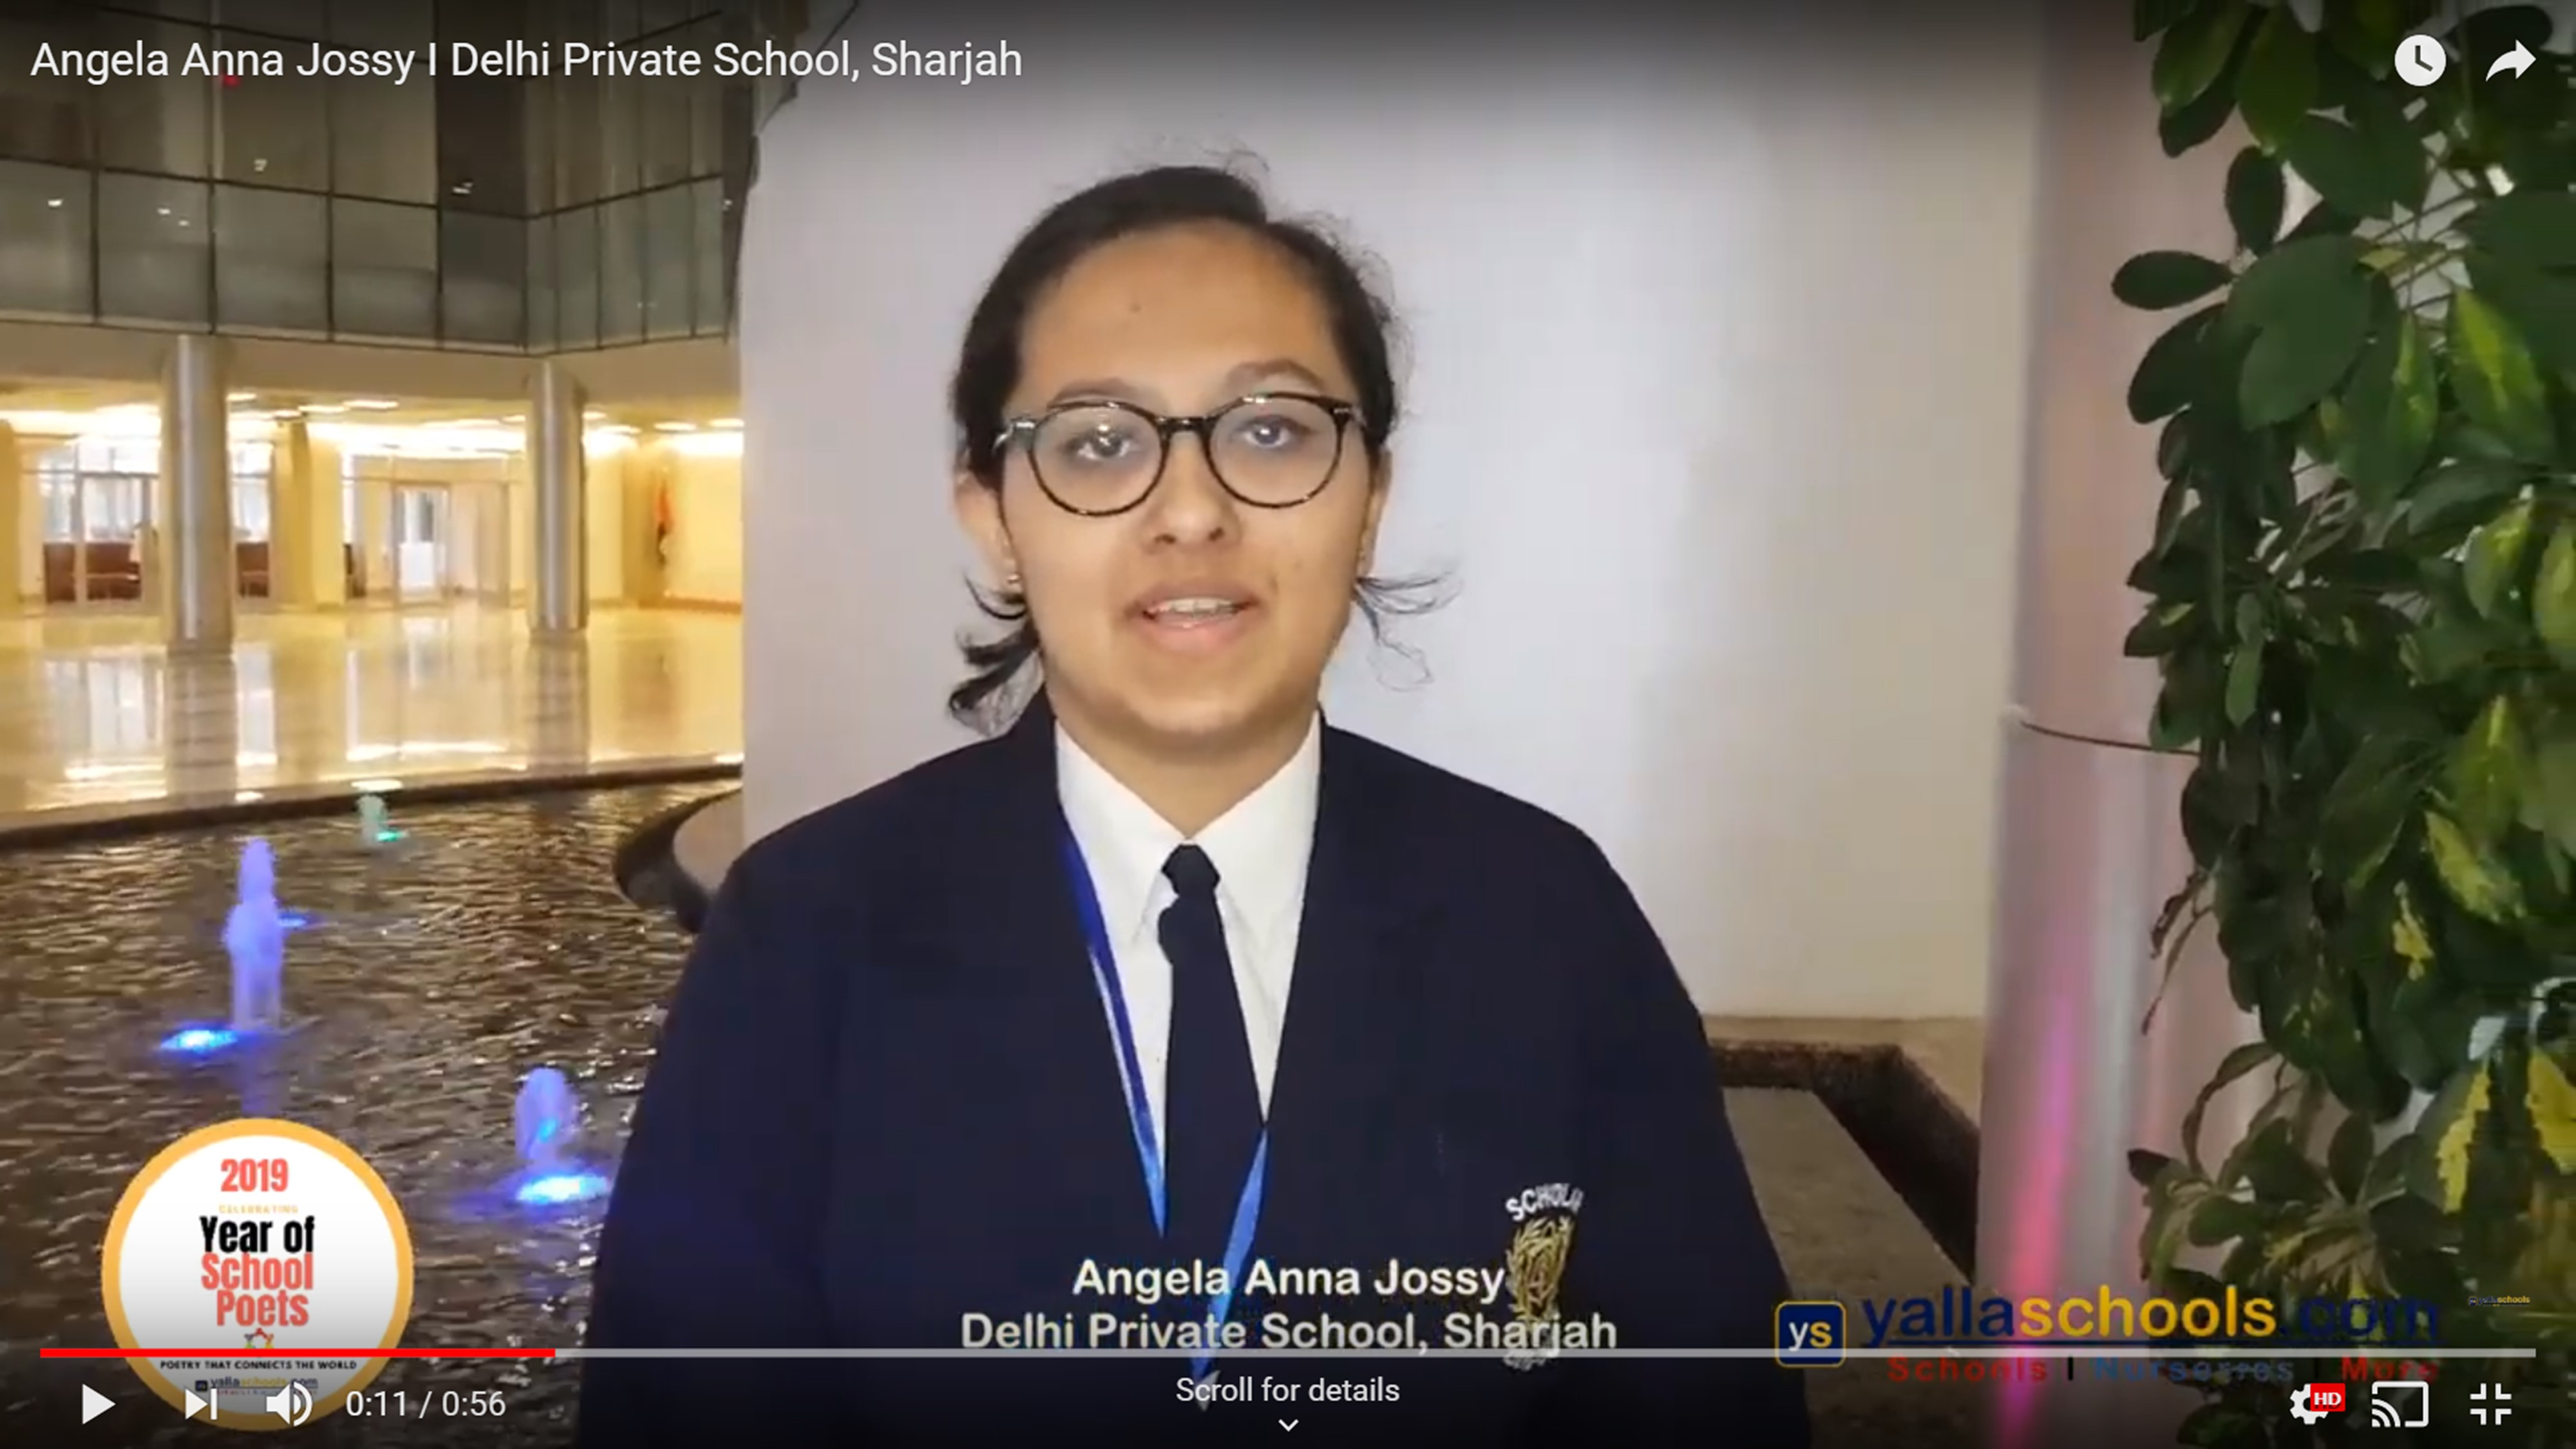 Angela_Anna_Jossy_I_Delhi_Private_School,_Sharjah